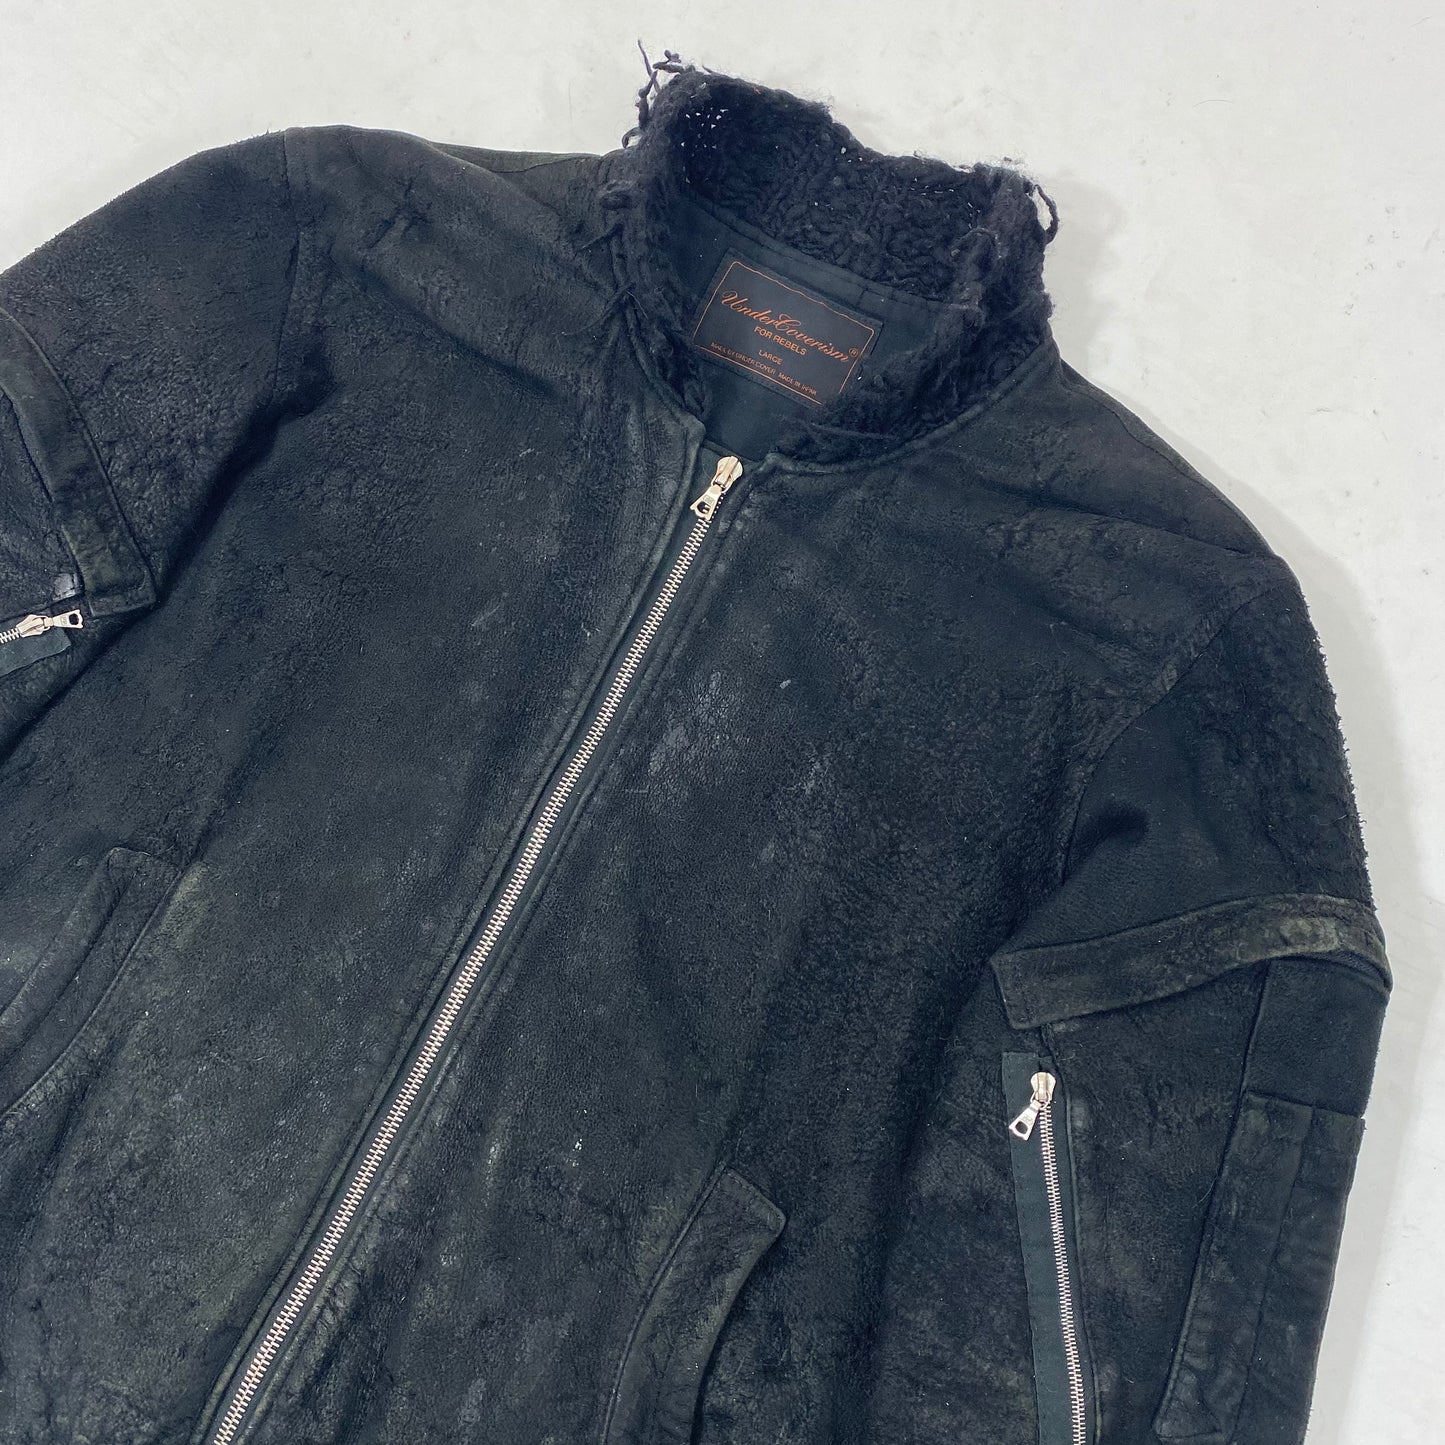 Undercover Blistered Lambskin Jacket AW04-05 Sz Medium